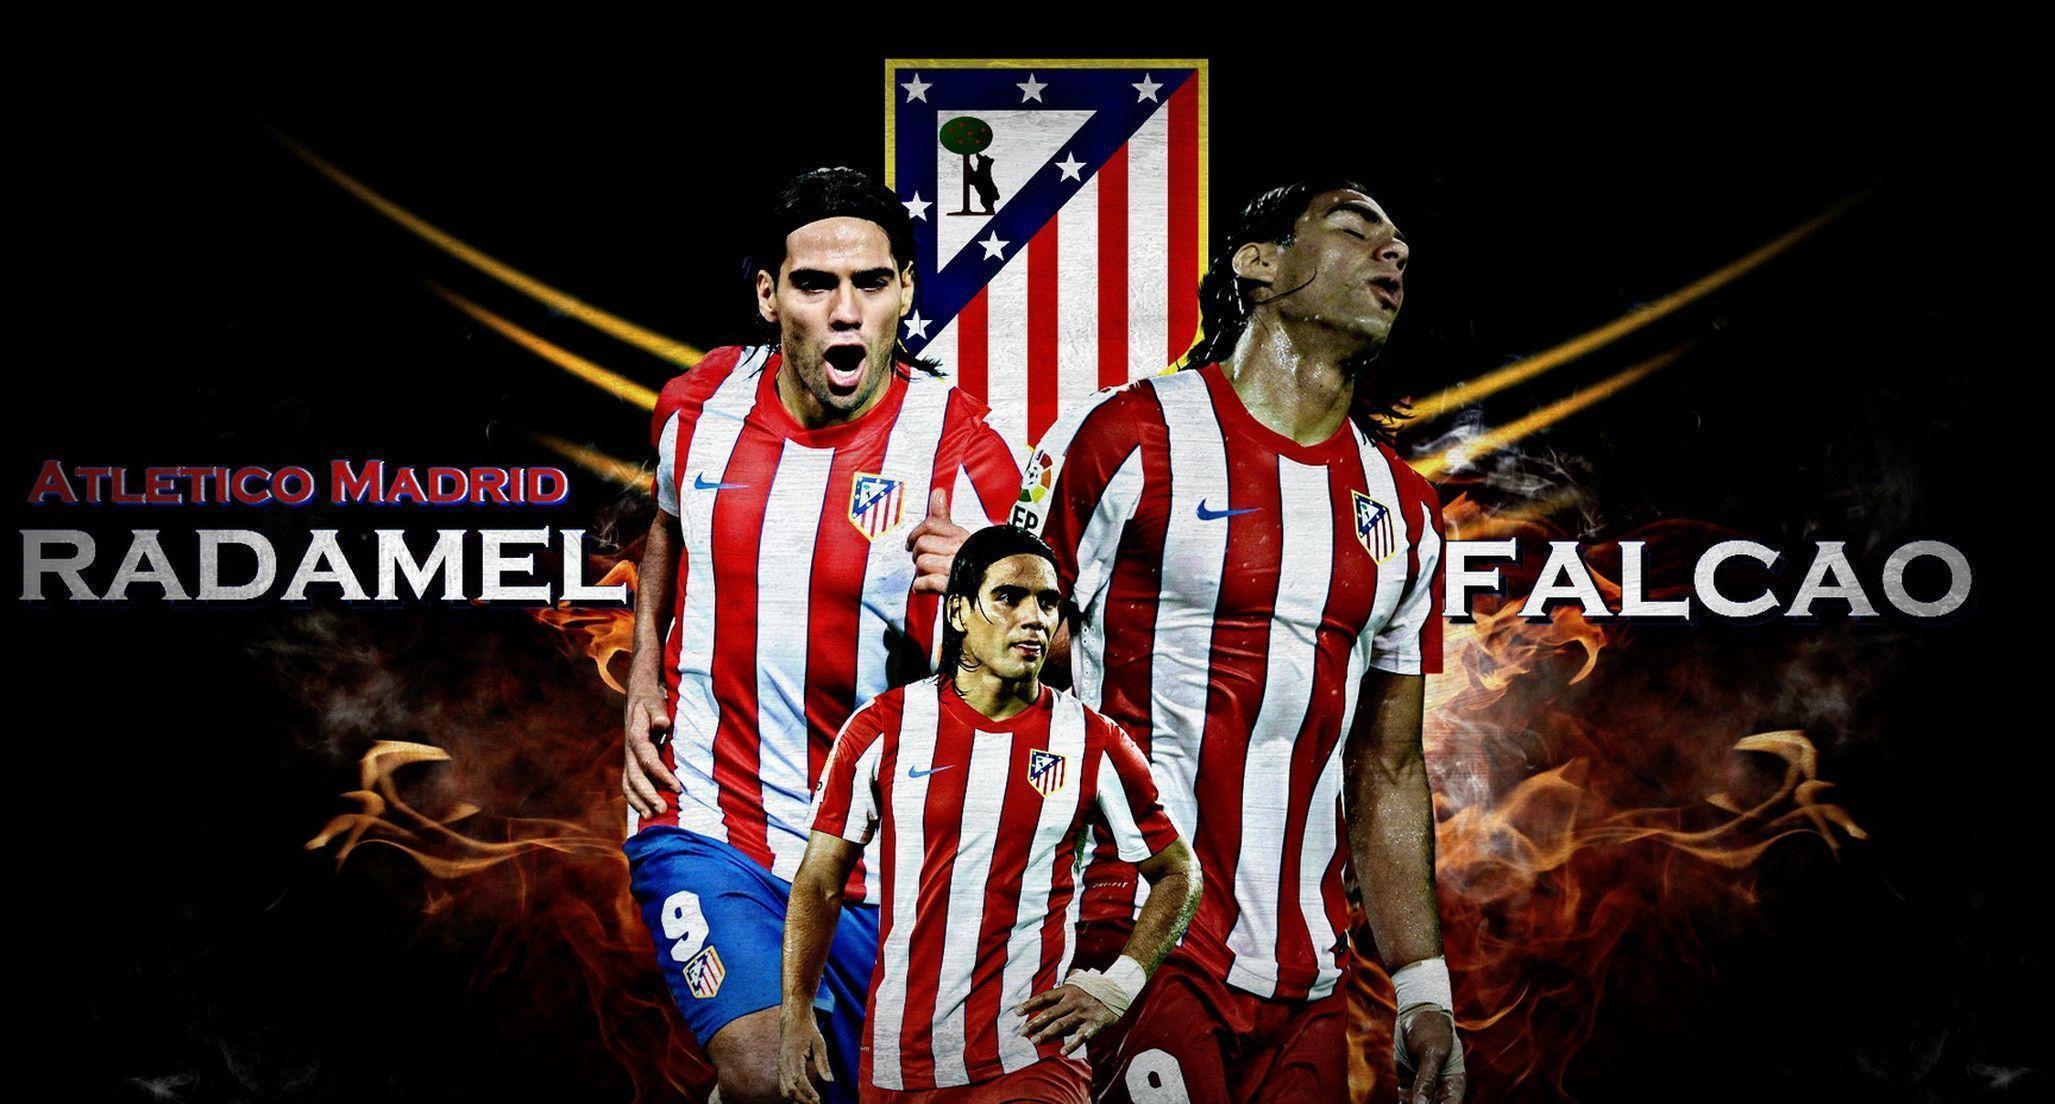 Atletico Madrid Radamel Falcao Wallpaper. Free Download Wallpaper